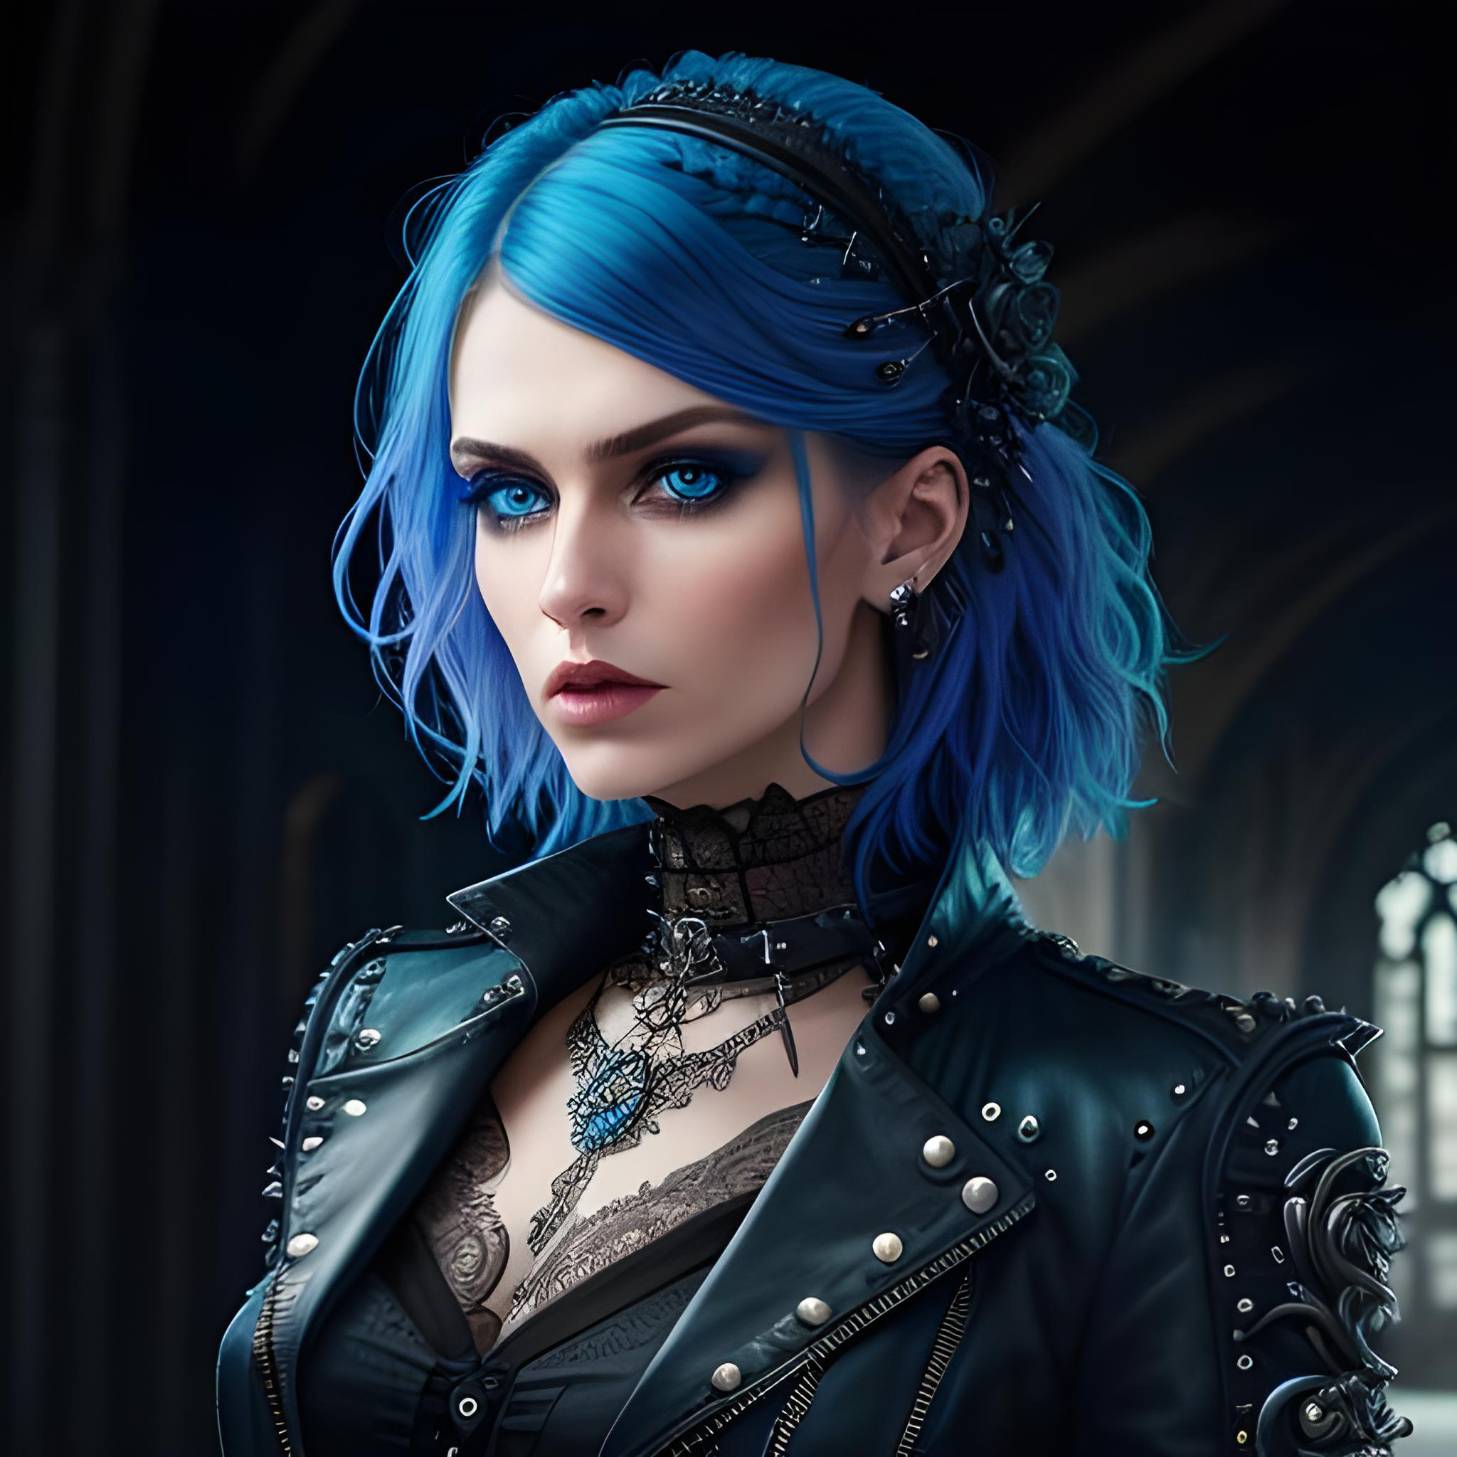 Cyberpunk gothic fashion AI by exokinetic on DeviantArt